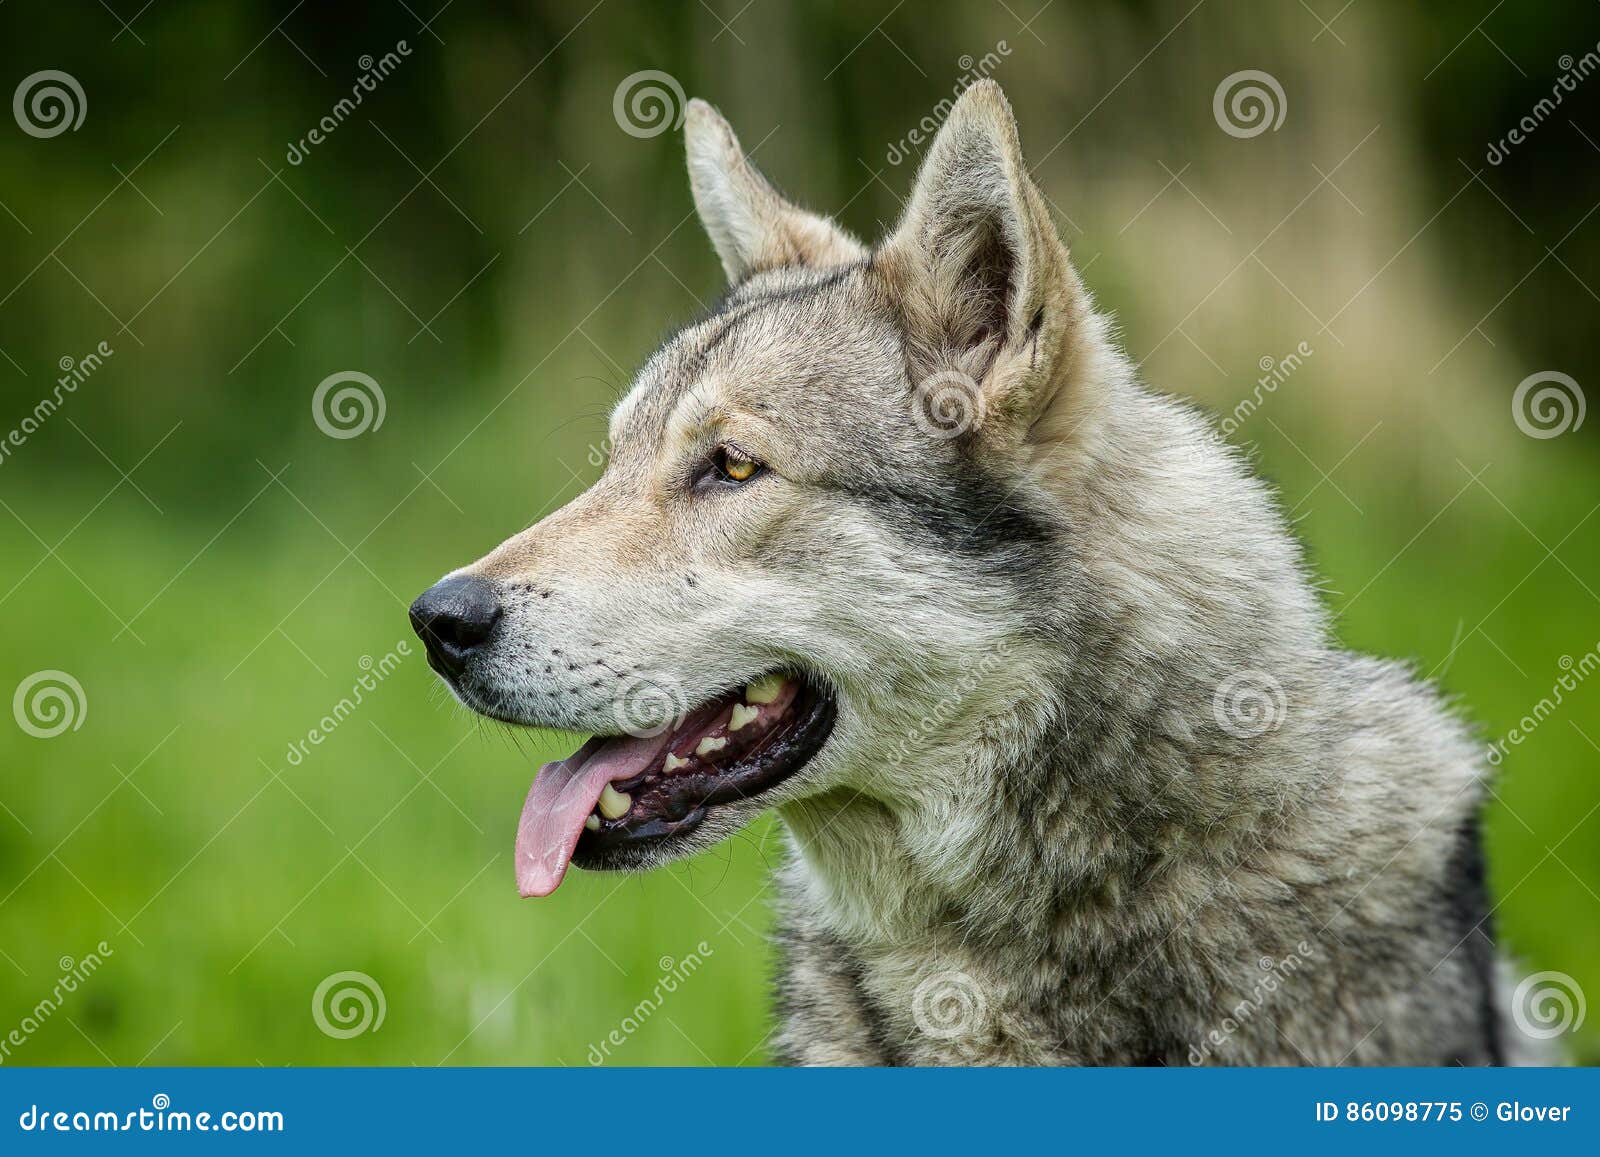 Saarloos Wolfdog Stock Image Image Of Curious Green 86098775